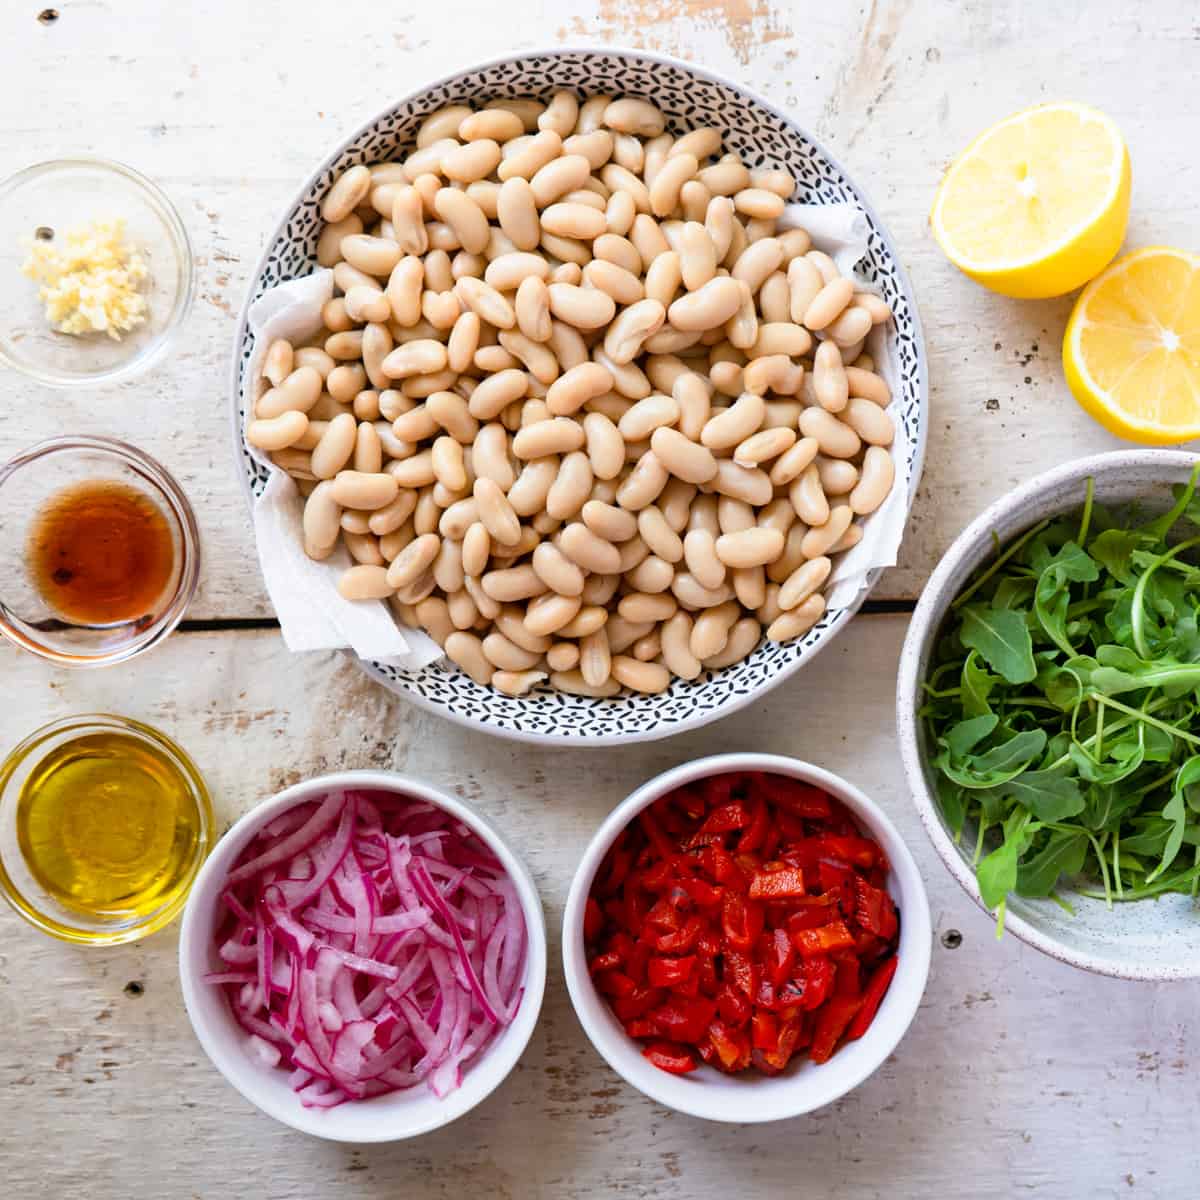 all prepared ingredients to make white bean salad.